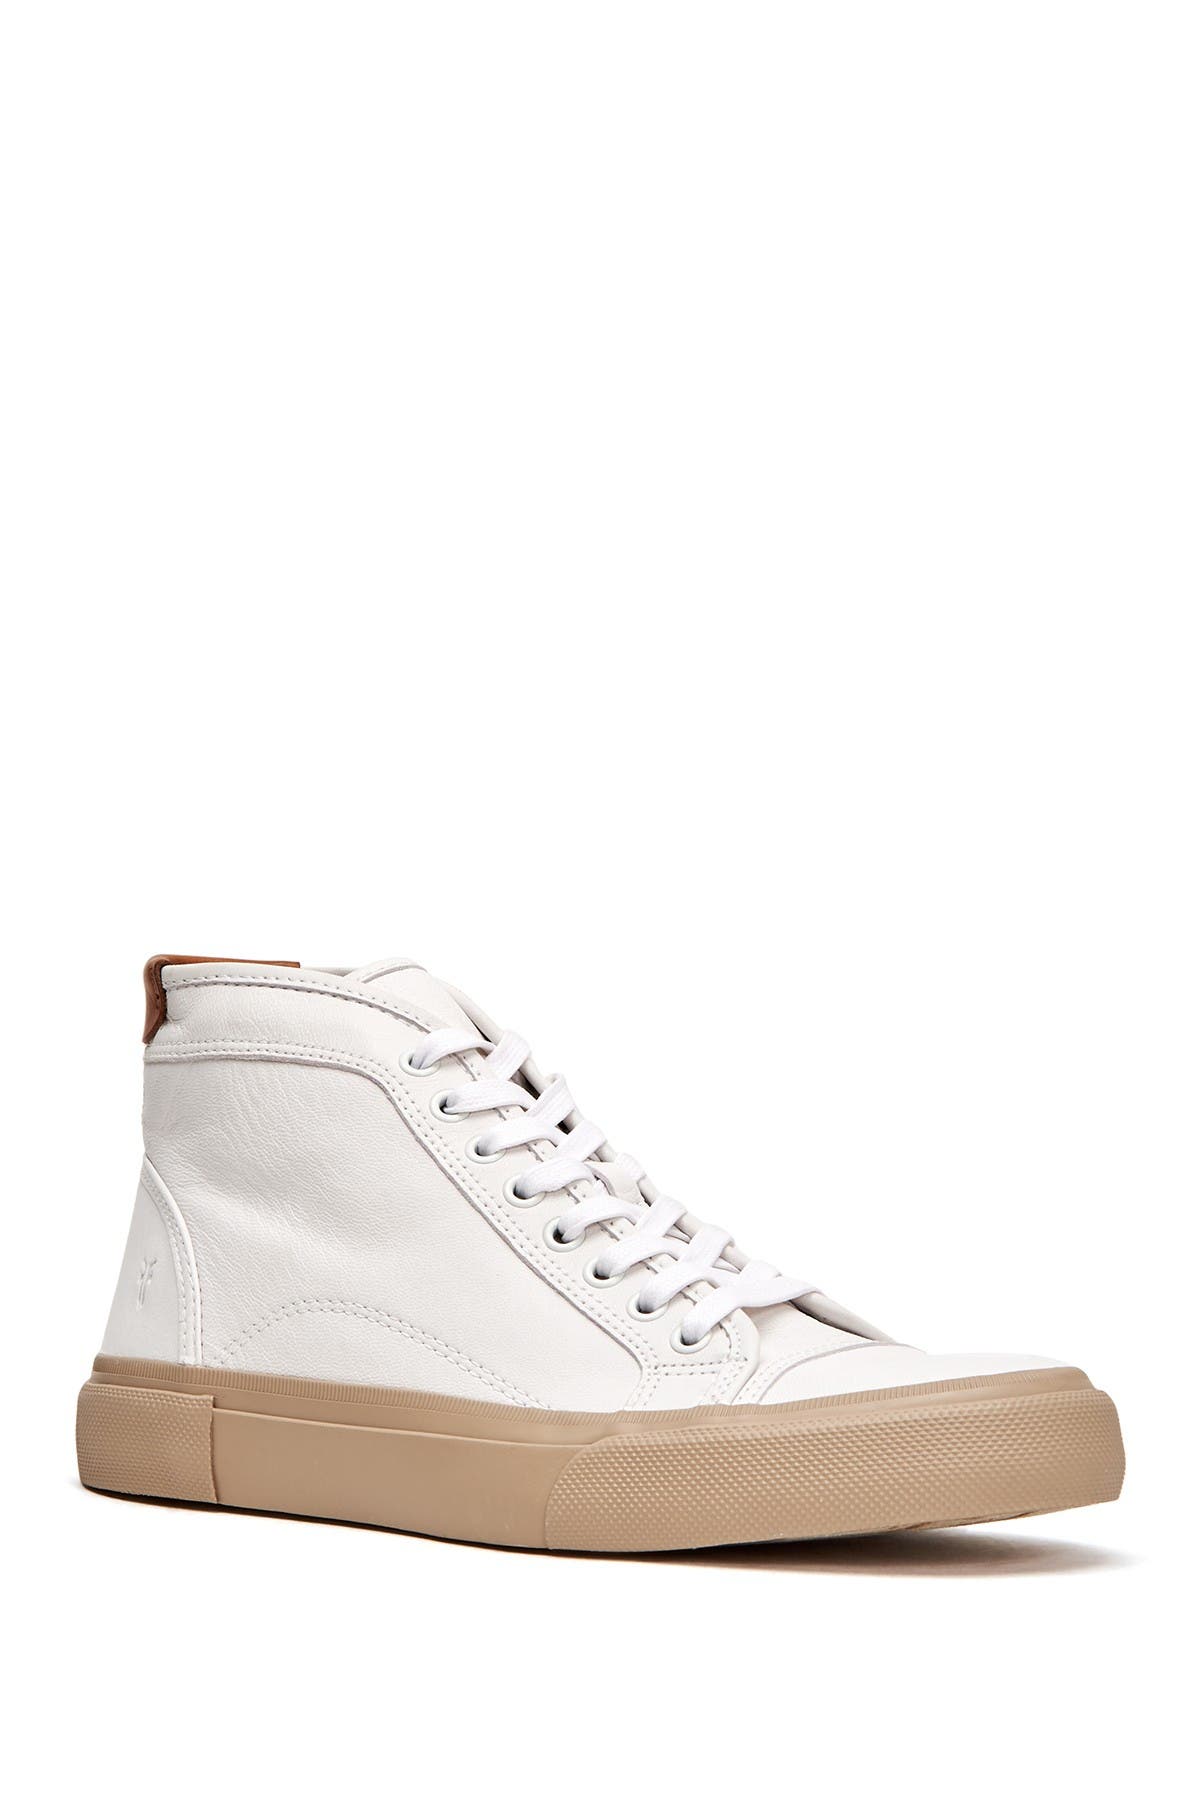 Frye | Ludlow Cap Toe High Top Sneaker 